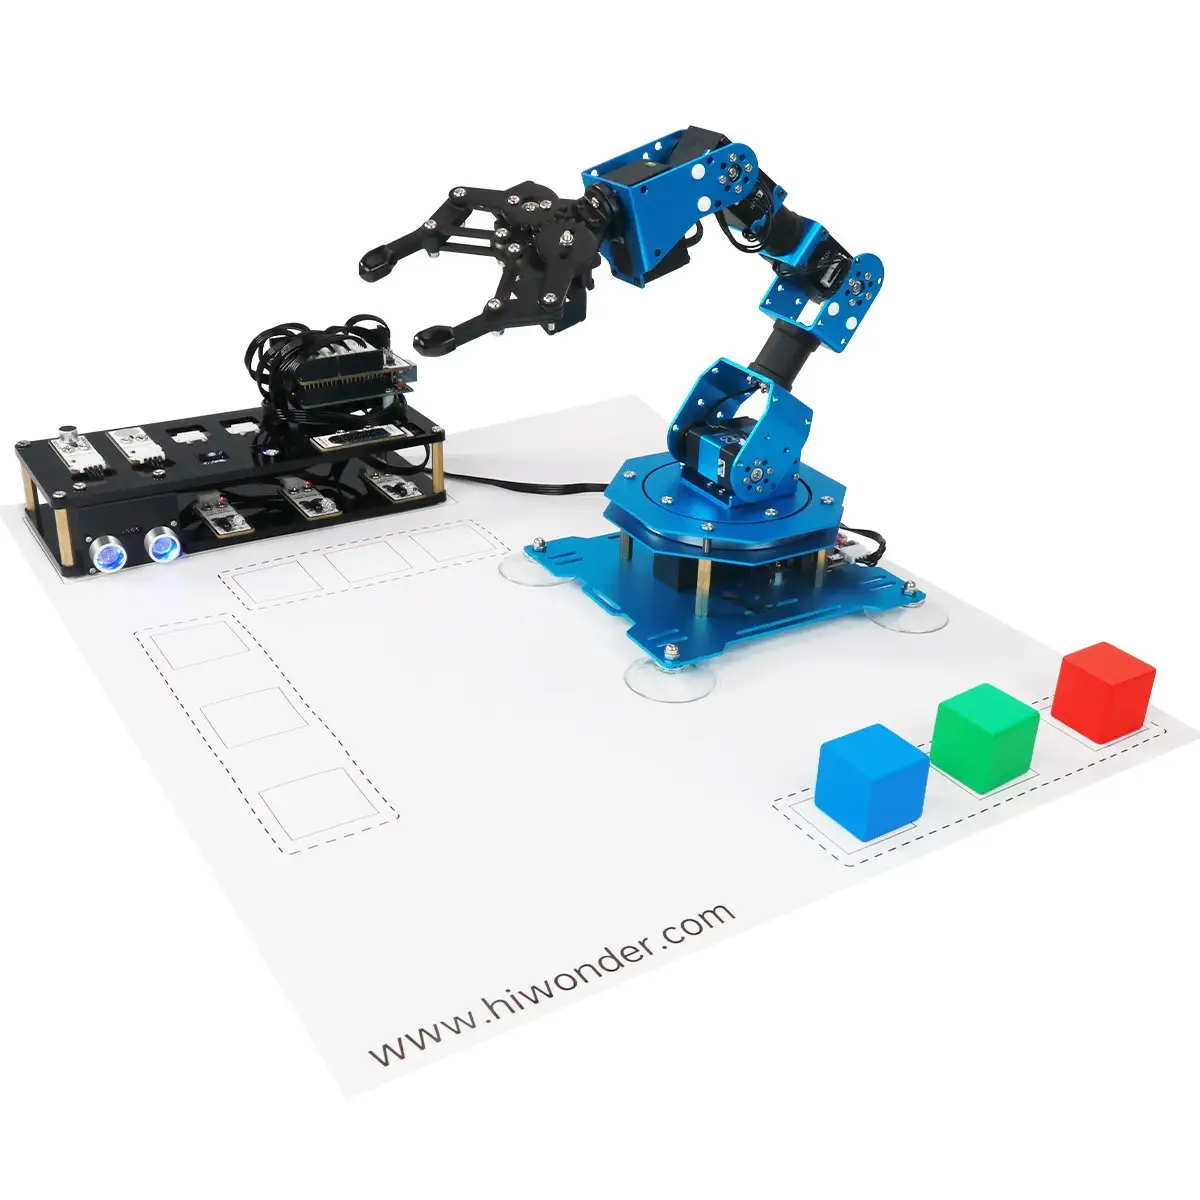 Smart Programmable Robotic Arm with Sensor Expansion Kit Starter Learning Kit for Arduino